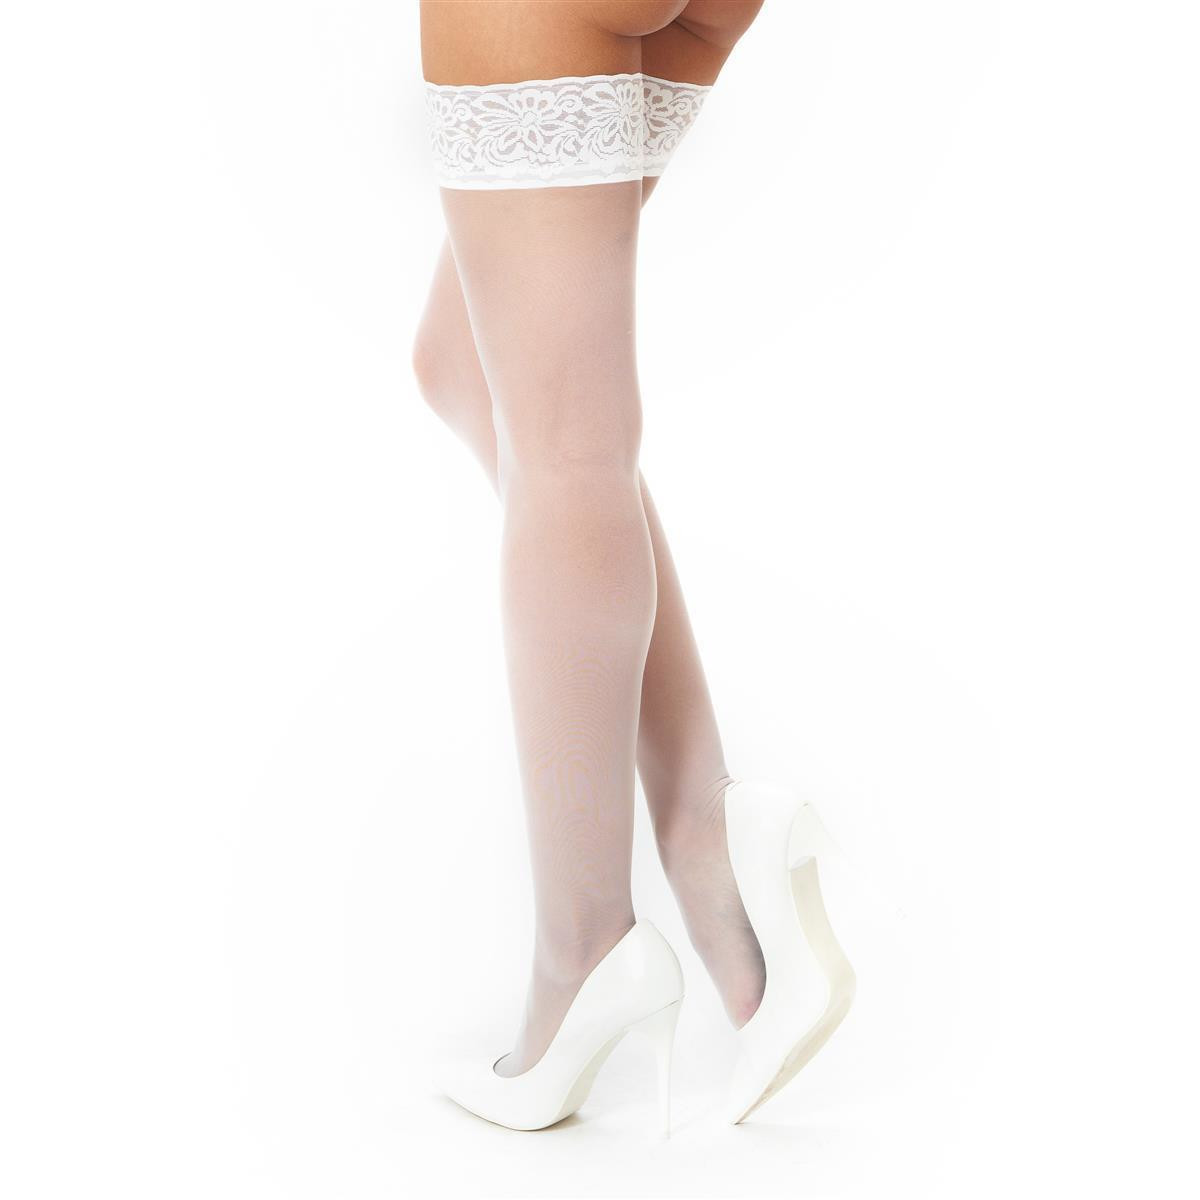 White hold up stockings